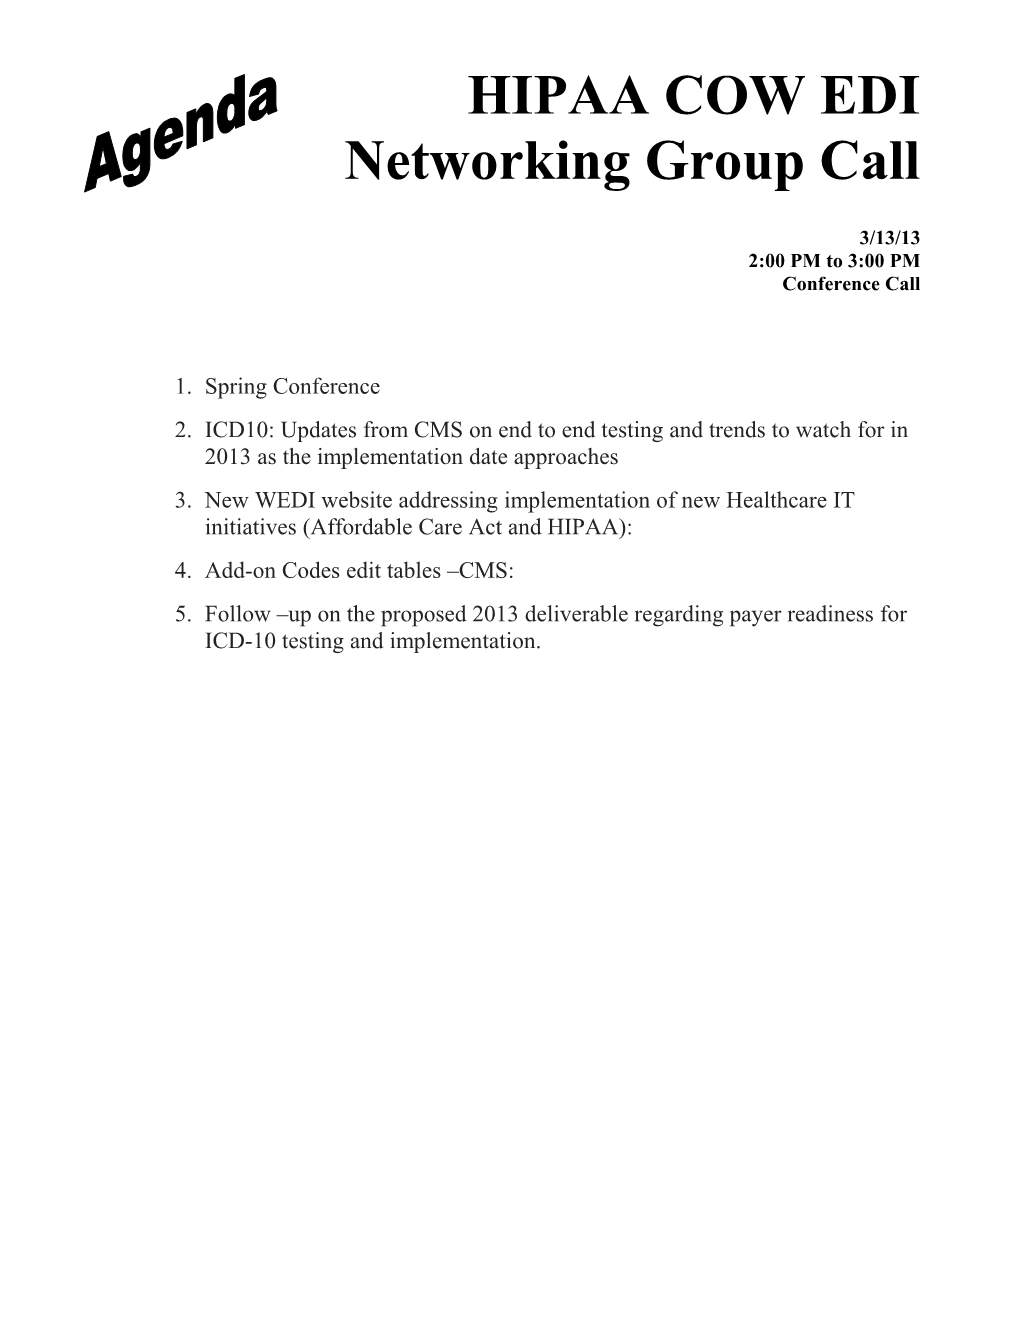 HIPAA COW EDI Workgroup Call s2